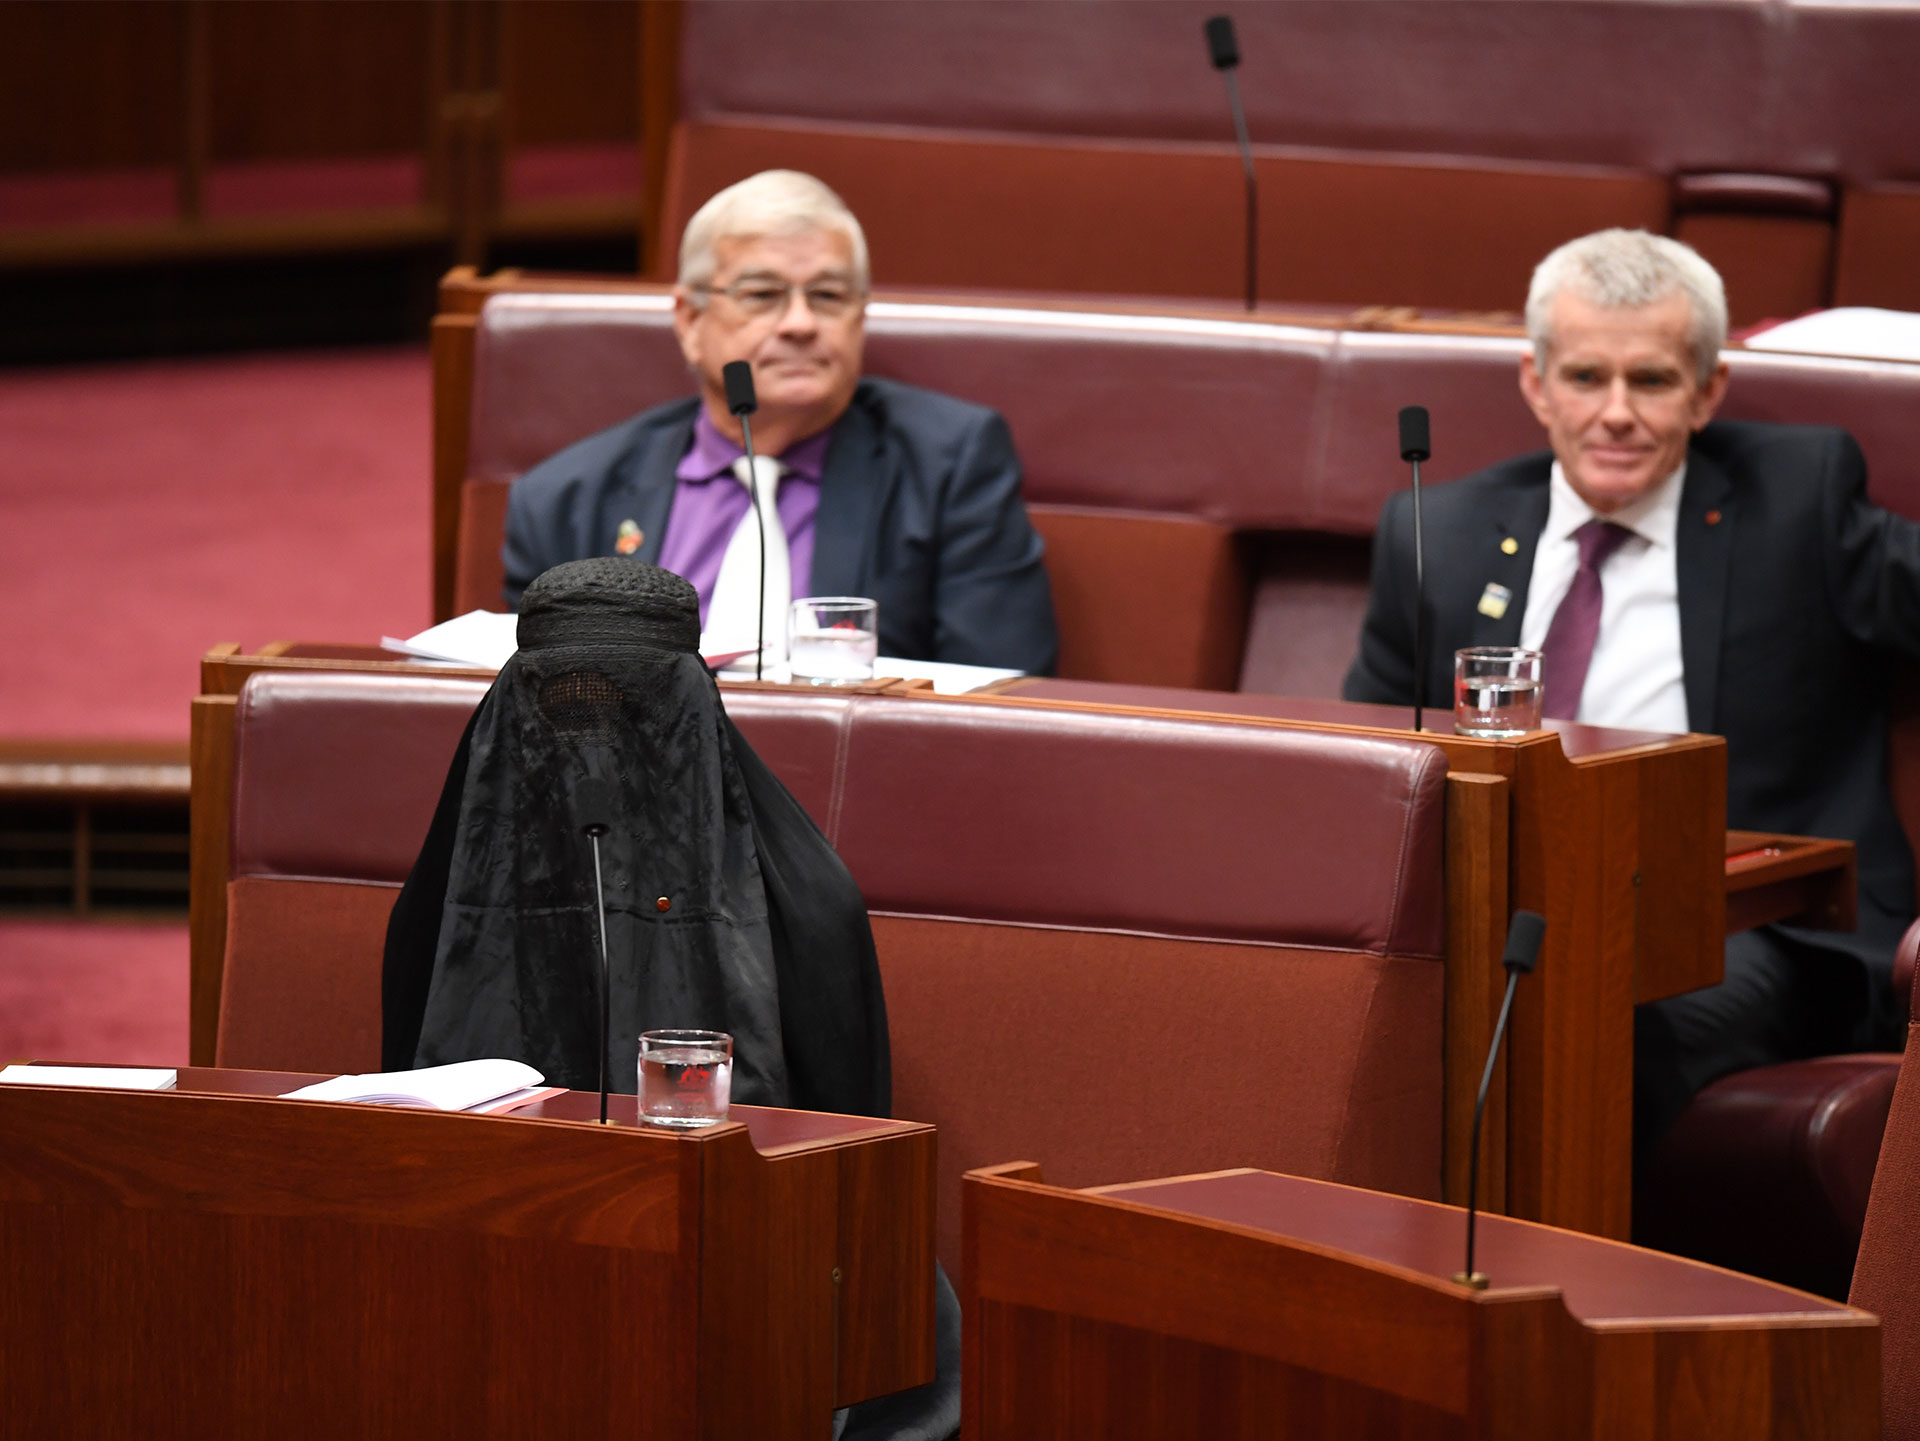 Was Pauline Hanson's burqa stunt more dangerous than she anticipated?